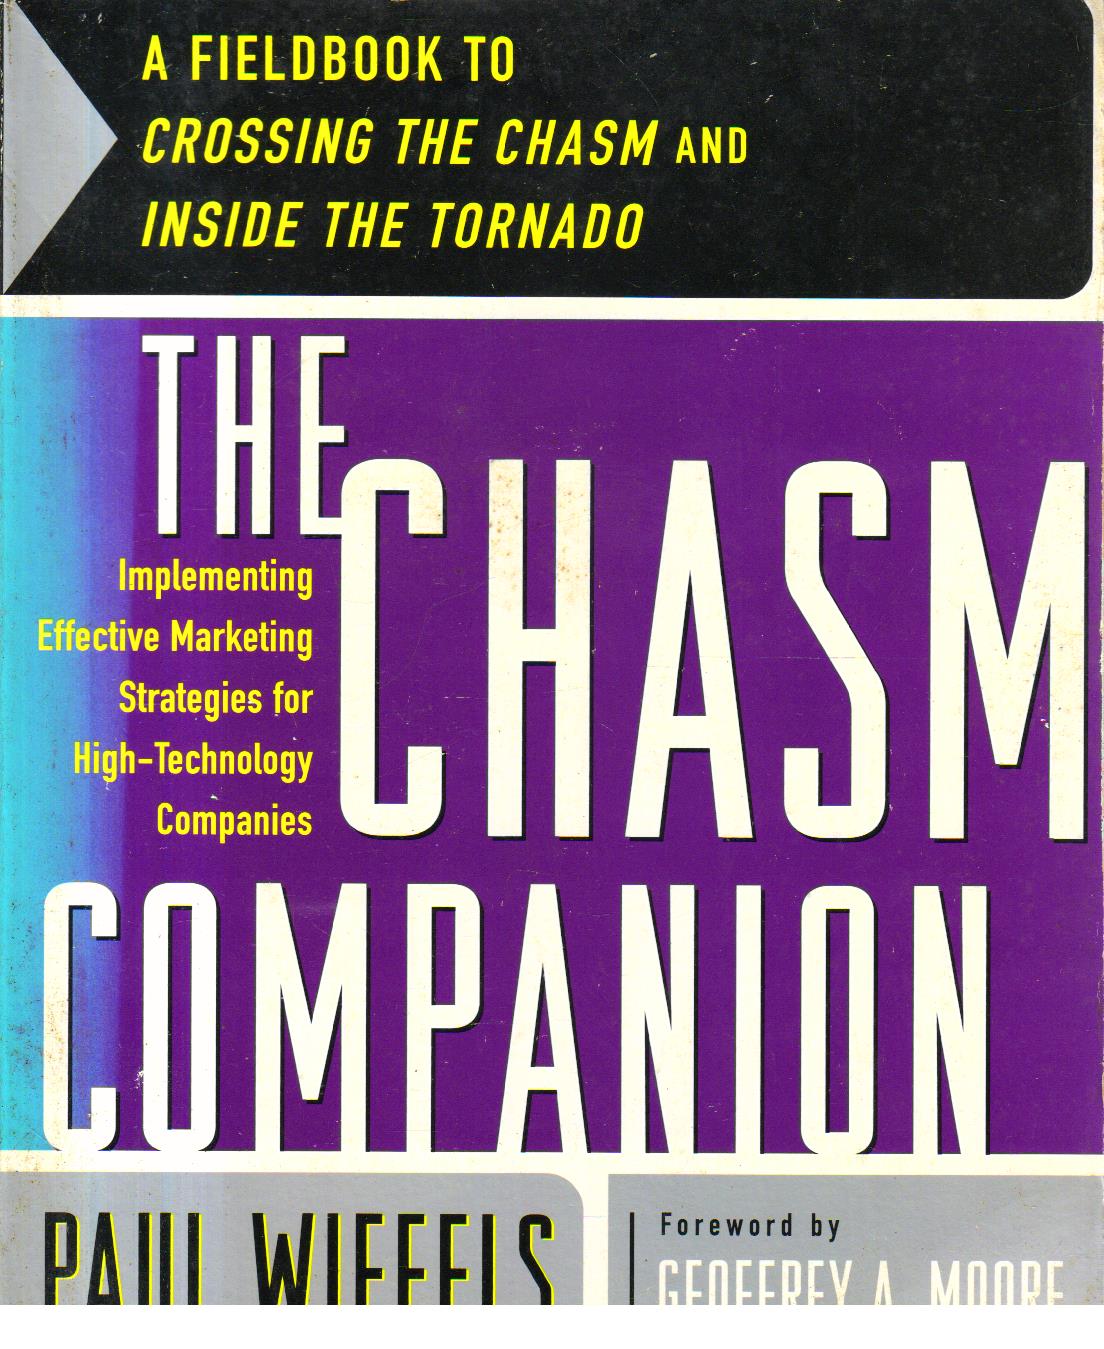 The Chasm Companion.